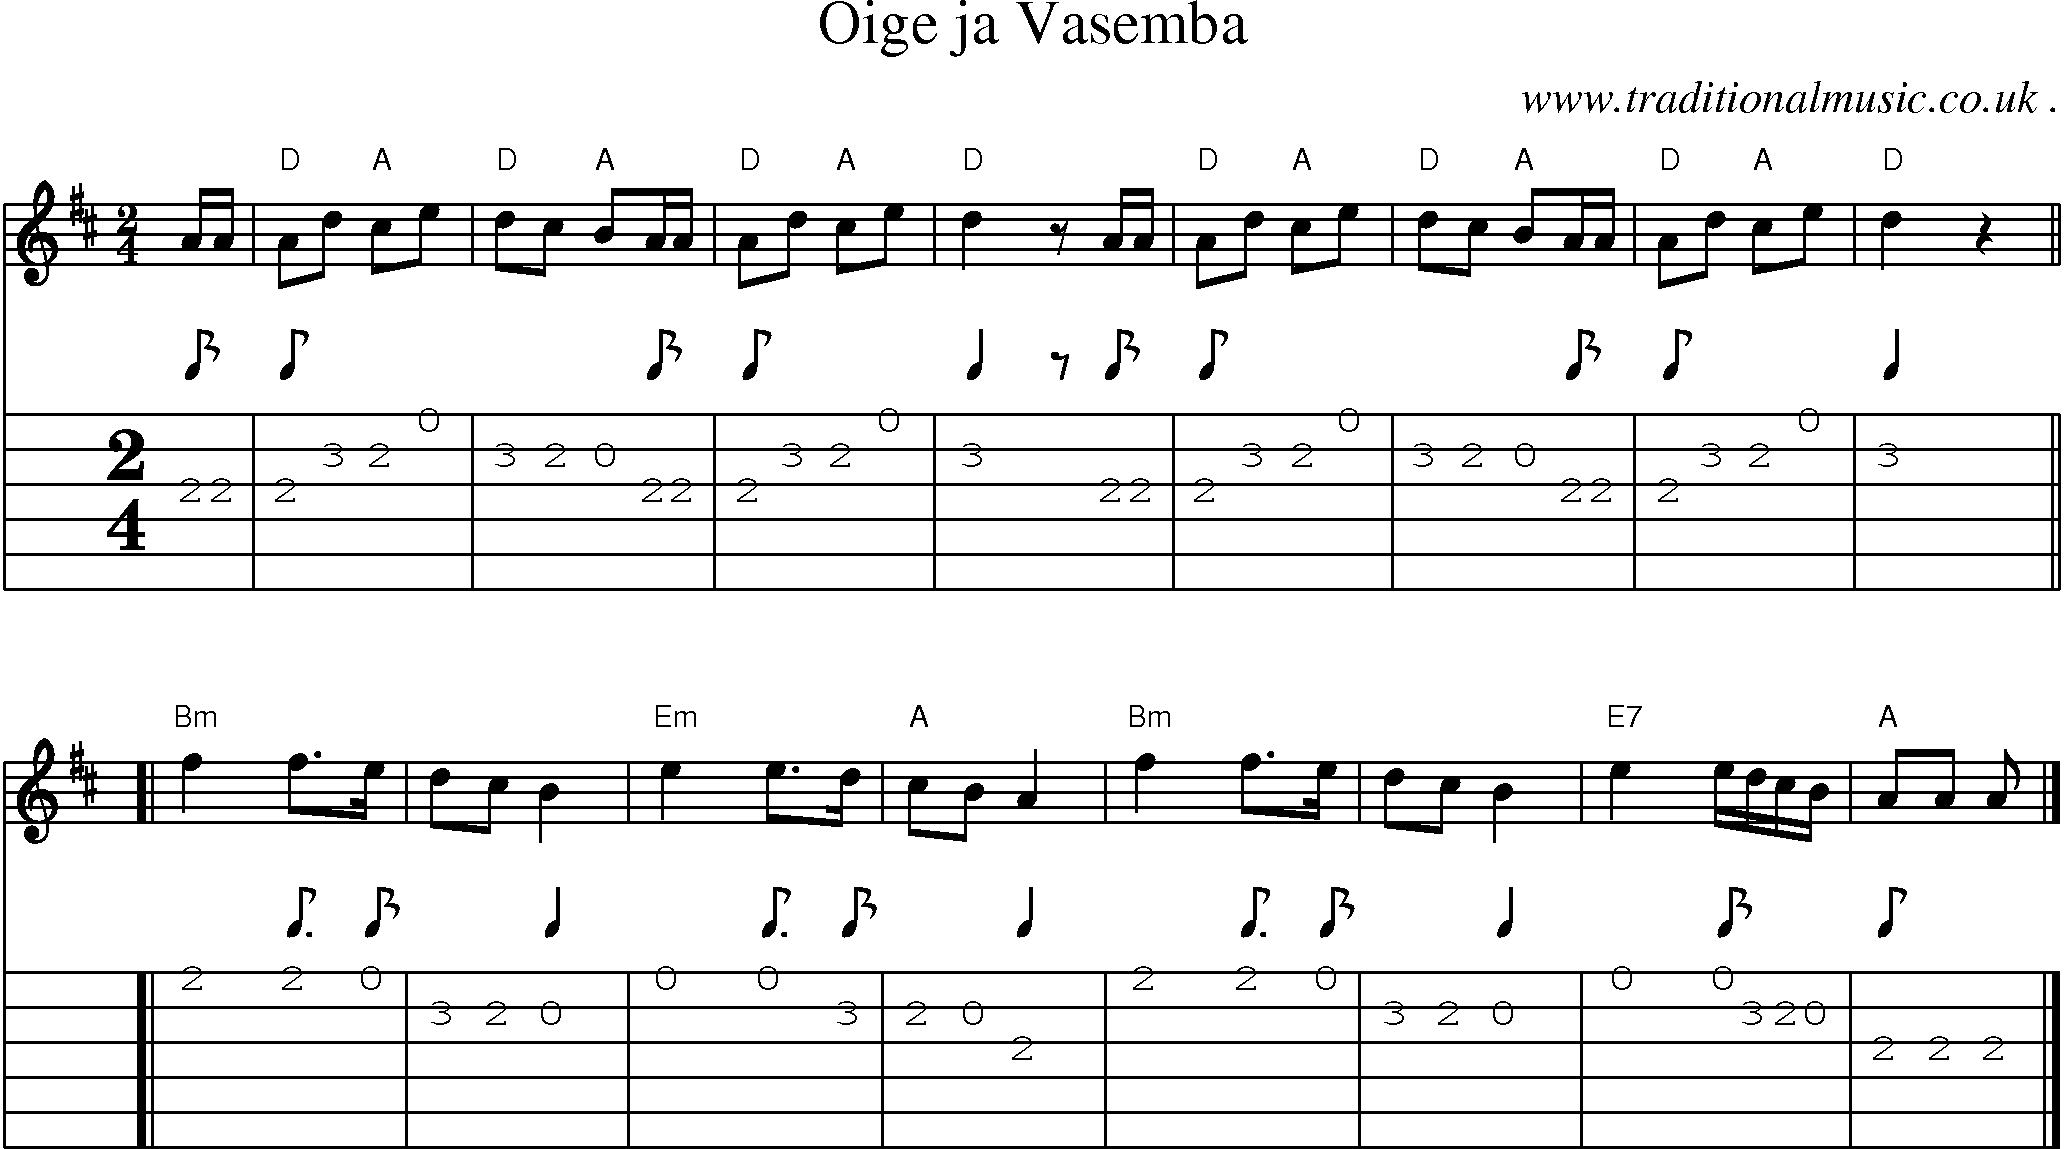 Sheet-music  score, Chords and Guitar Tabs for Oige Ja Vasemba